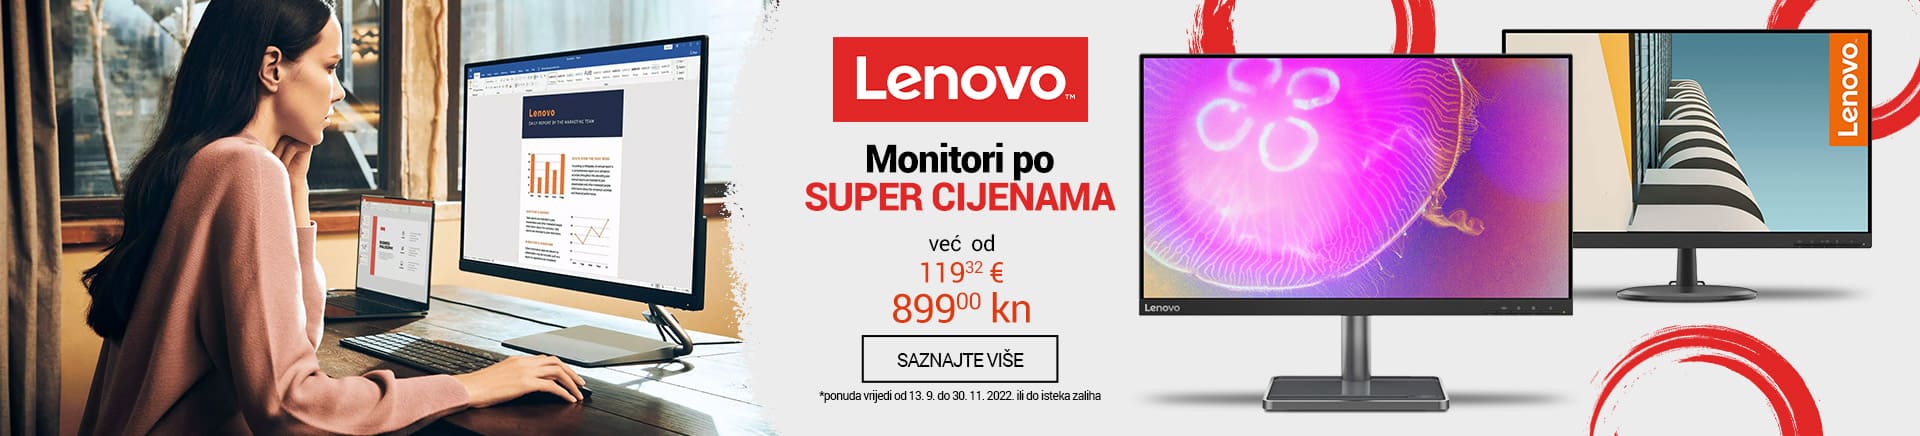 Lenovo monitori po super cijenama